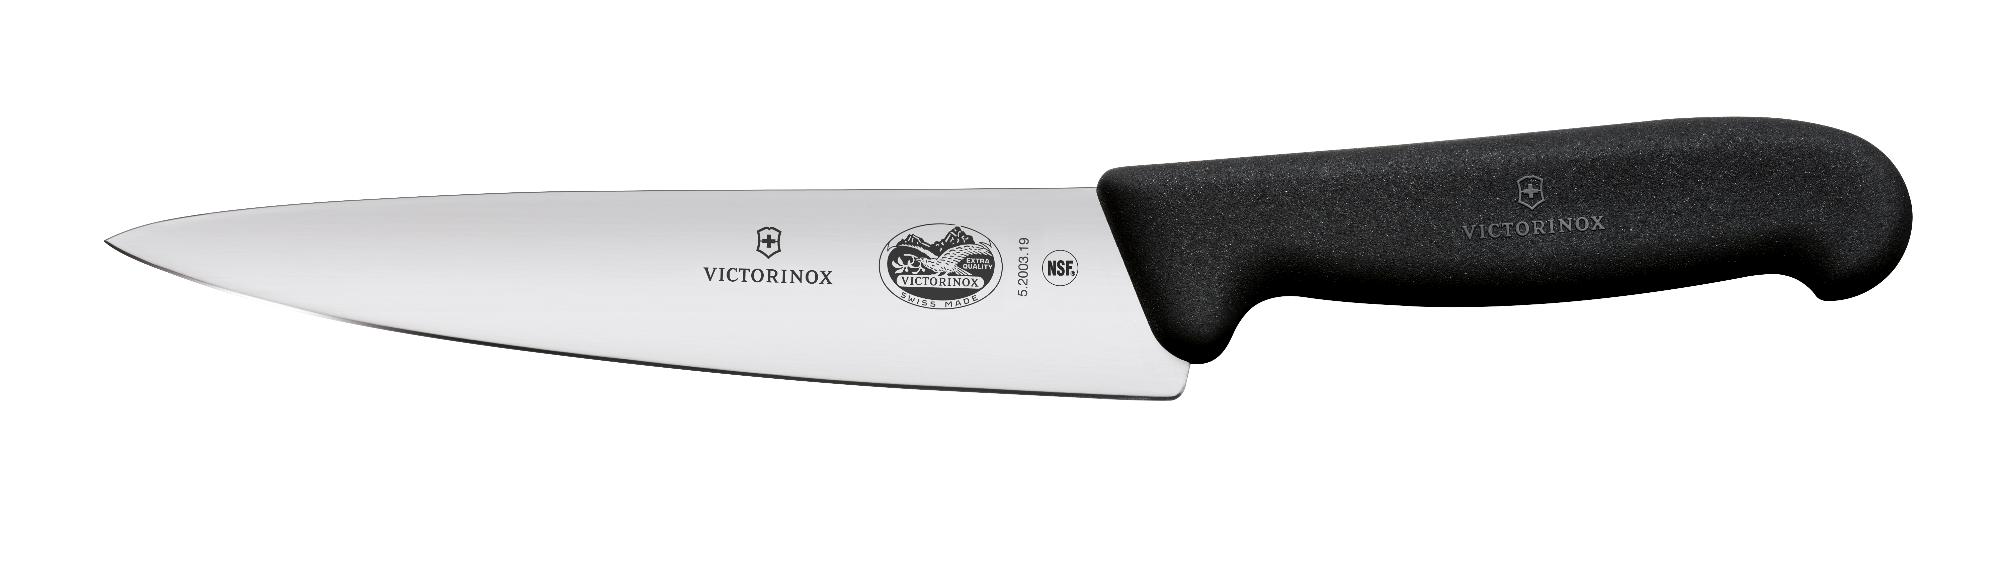 Fibrox kitchen knife, wide blade, 19 cm - black